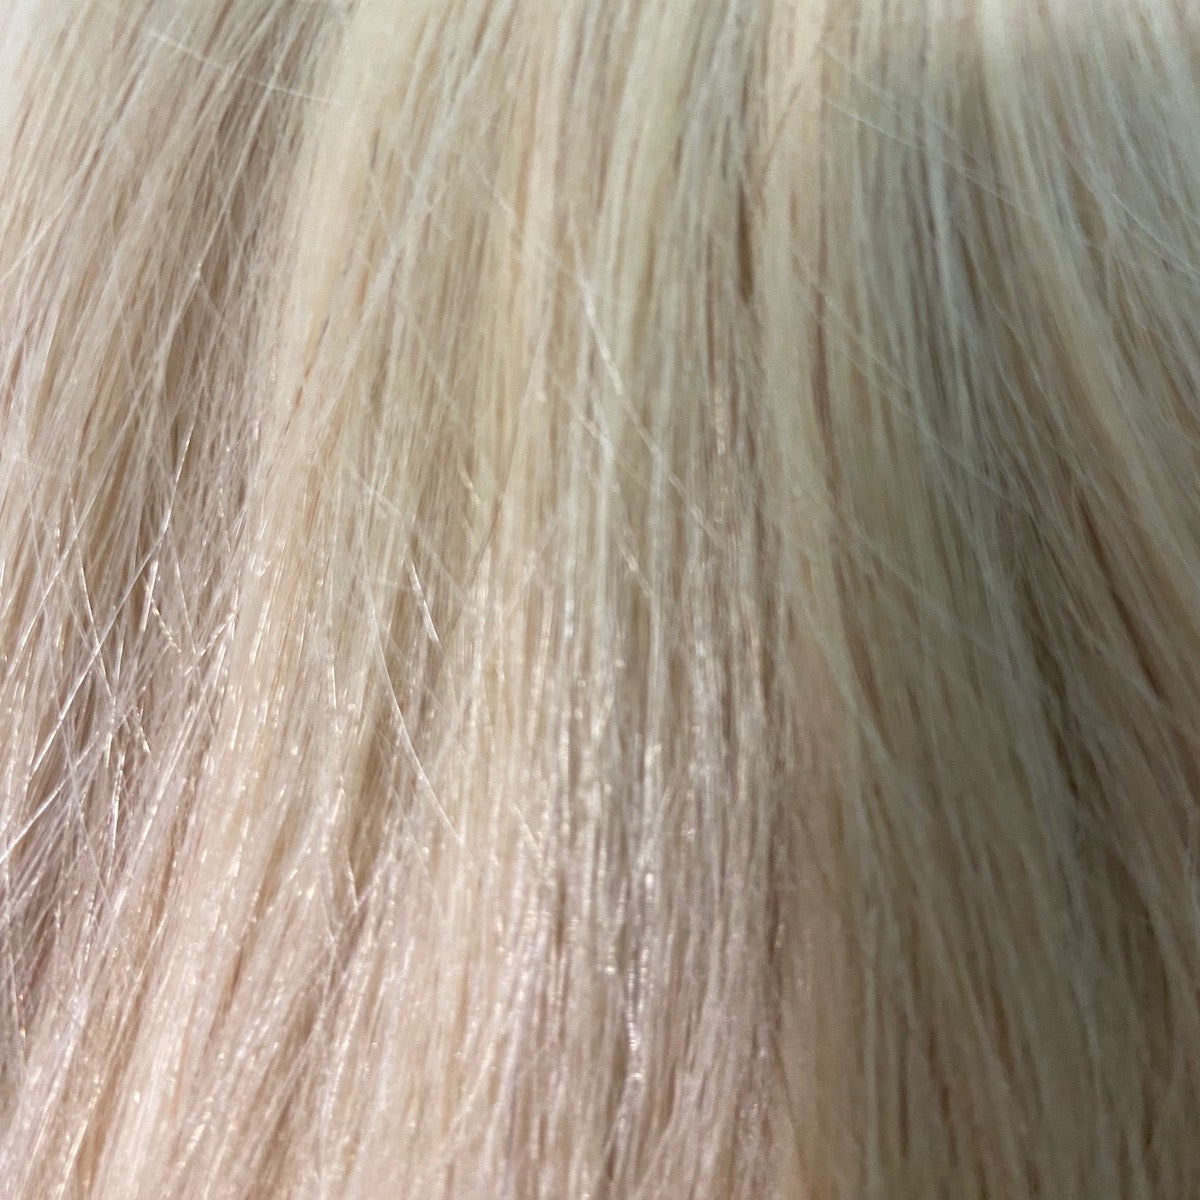 Tape-In 18" 50g Professional Hair Extensions - #19 Desert Blonde